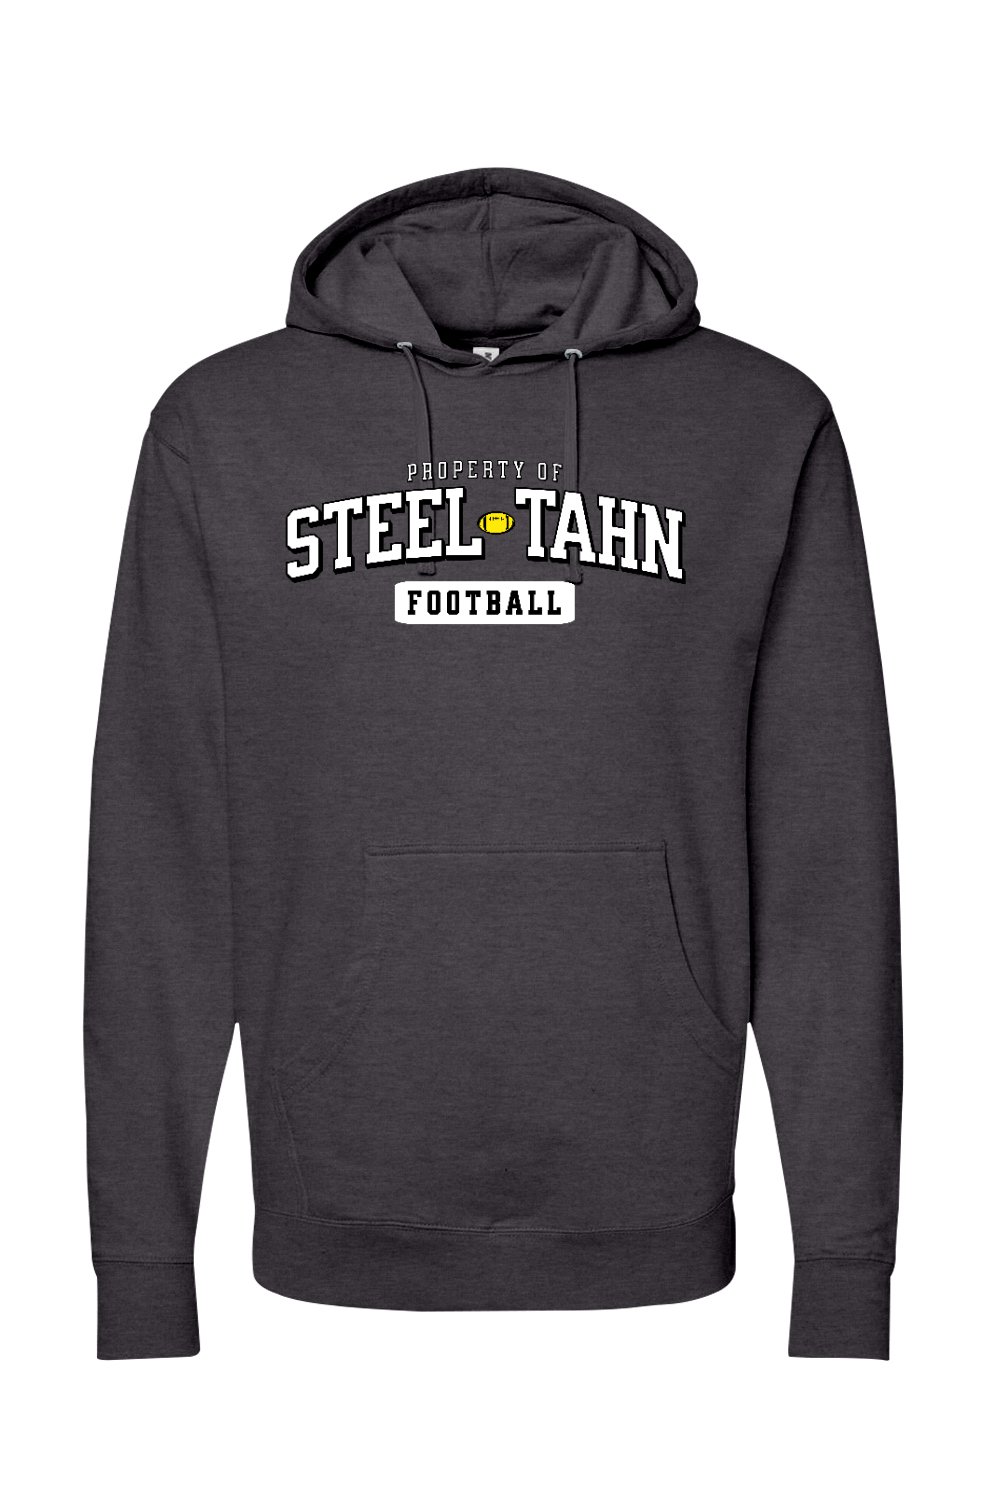 Property of Steel Tahn Football - Hoodie - Yinzylvania